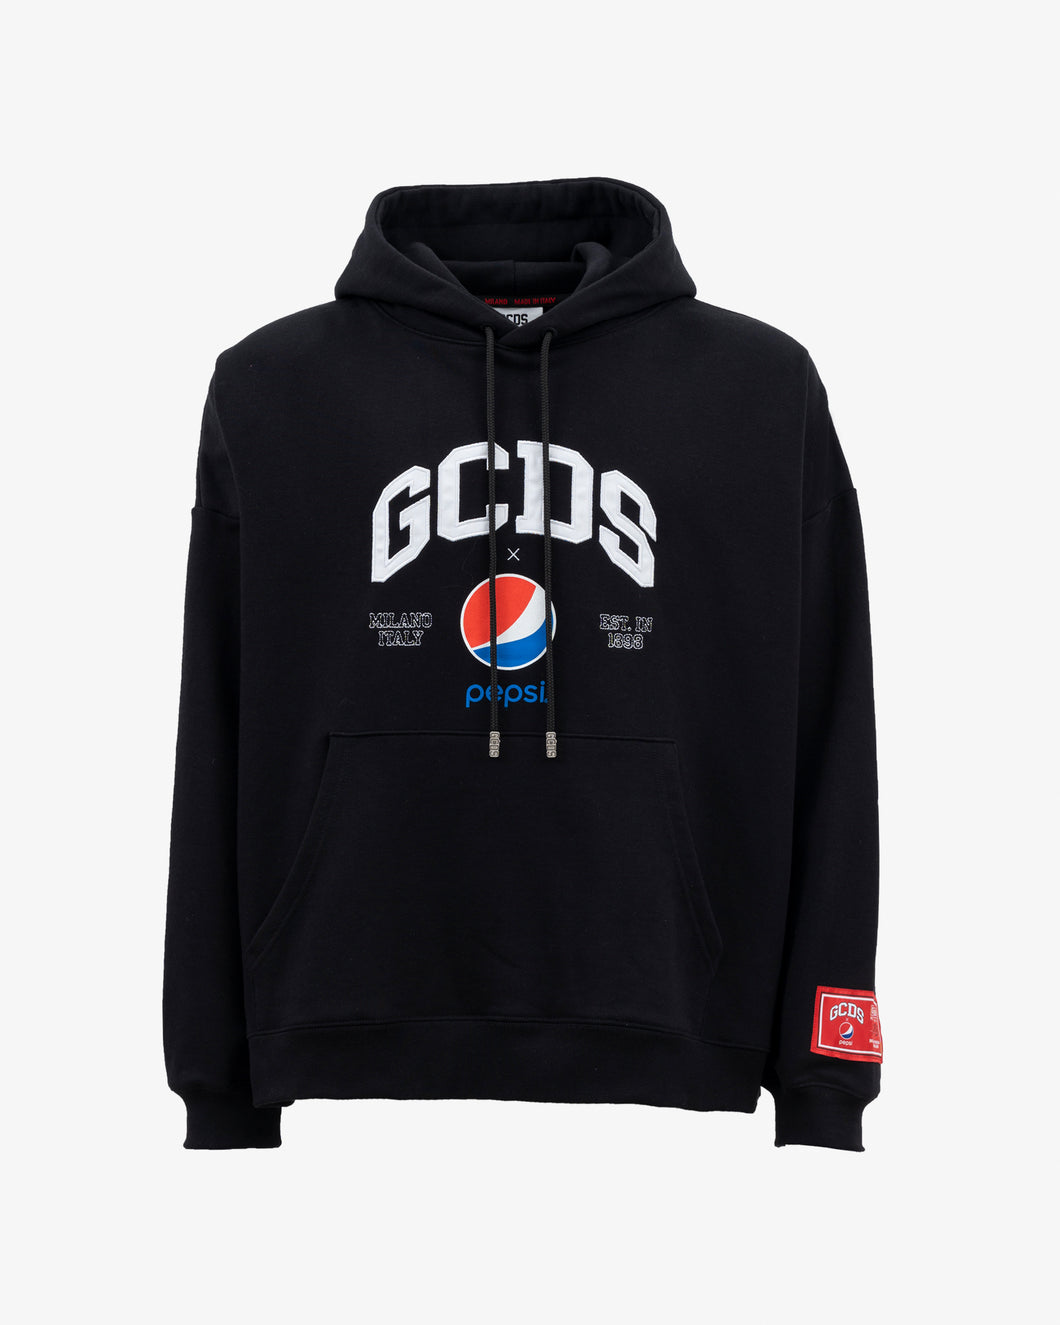 Gcds x Pepsi Logo Lounge Hoodie